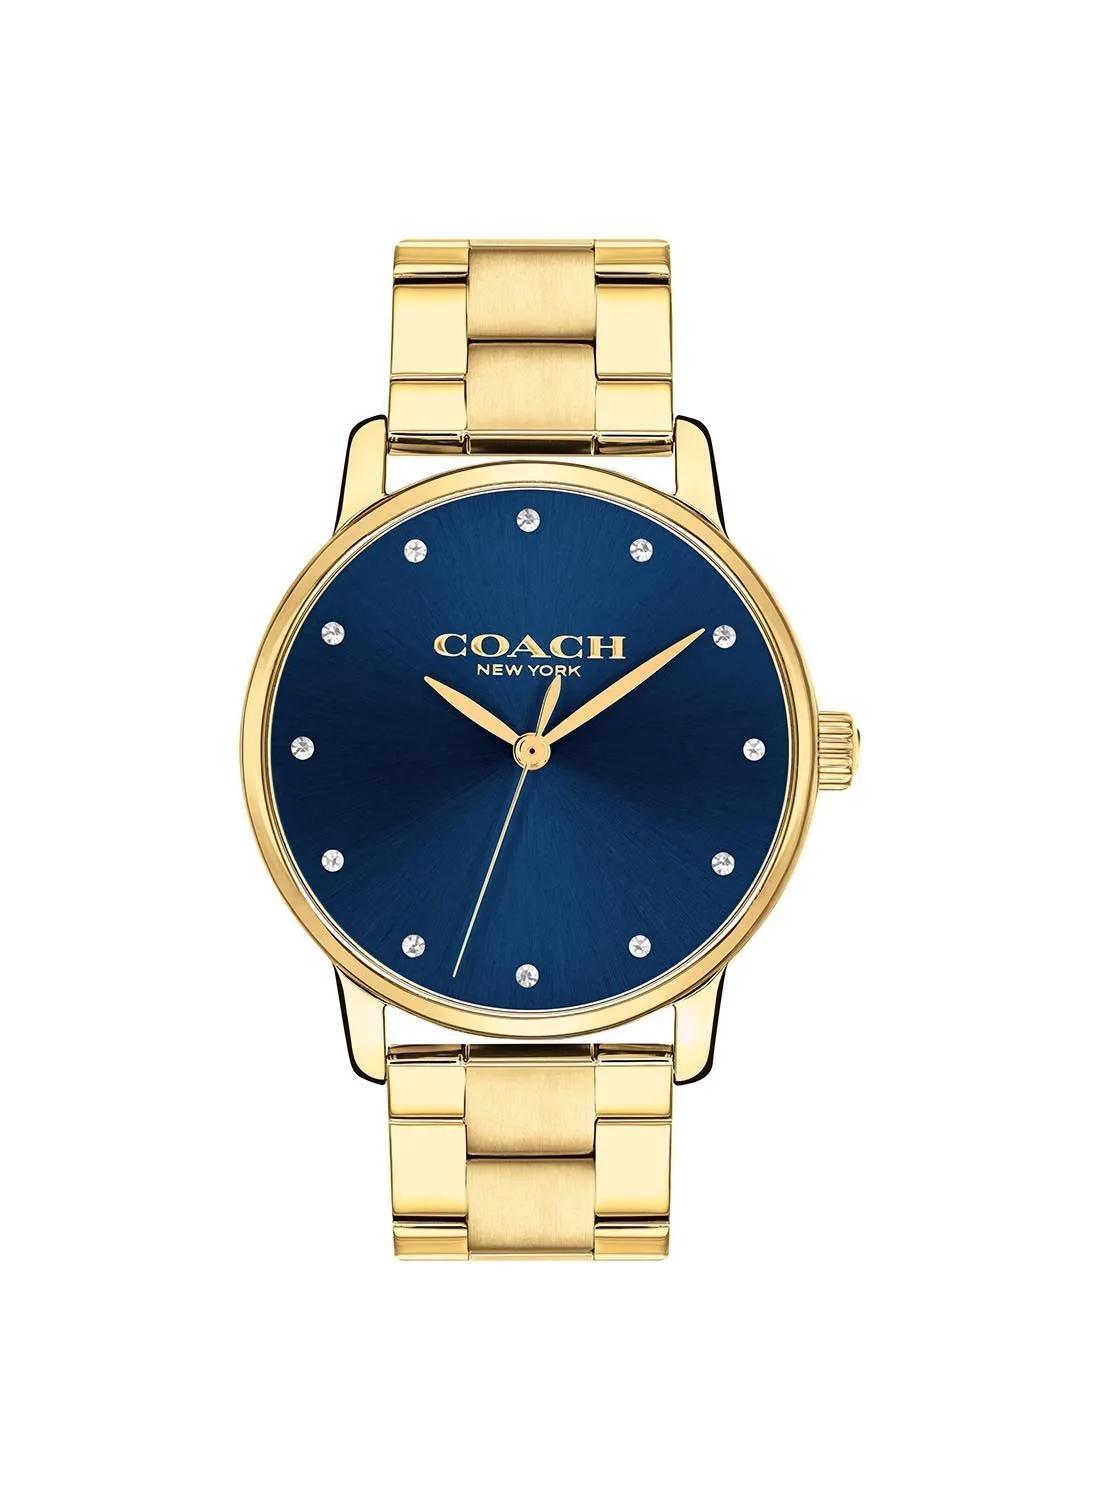 COACH Women's Analog Round Stainless Steel Wrist Watch 14503970